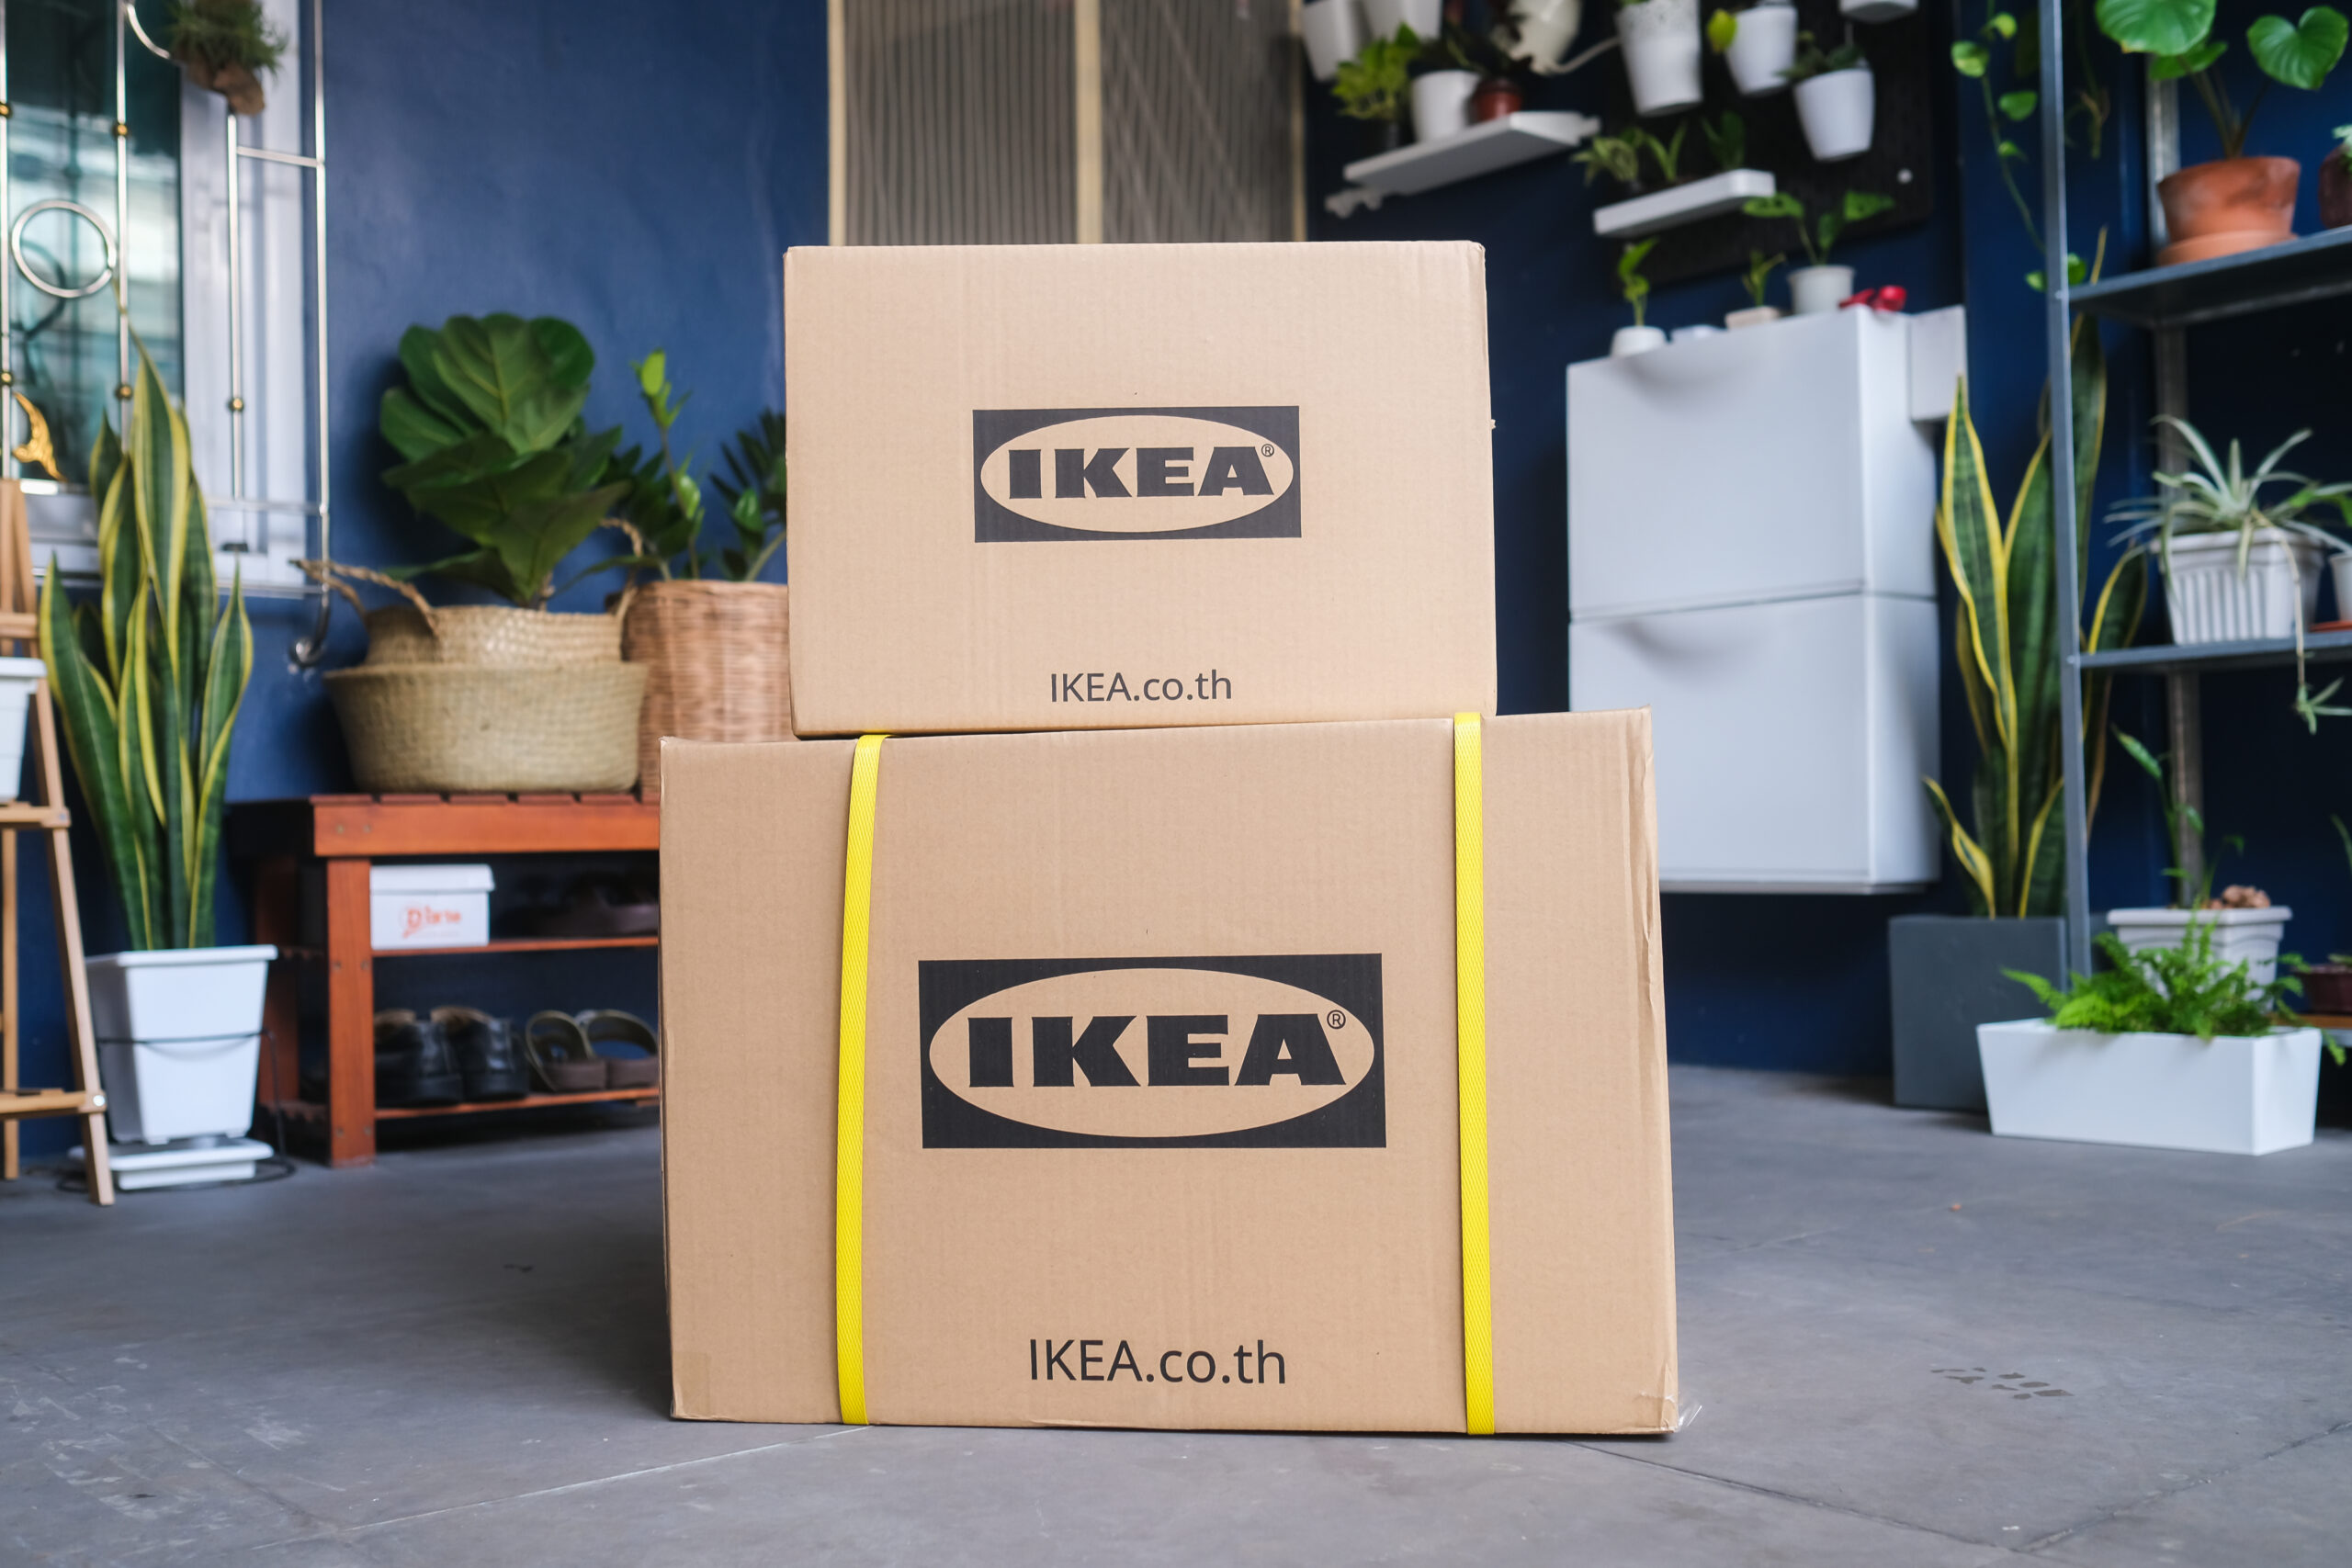 IKEA commits to zero-emission HGVs